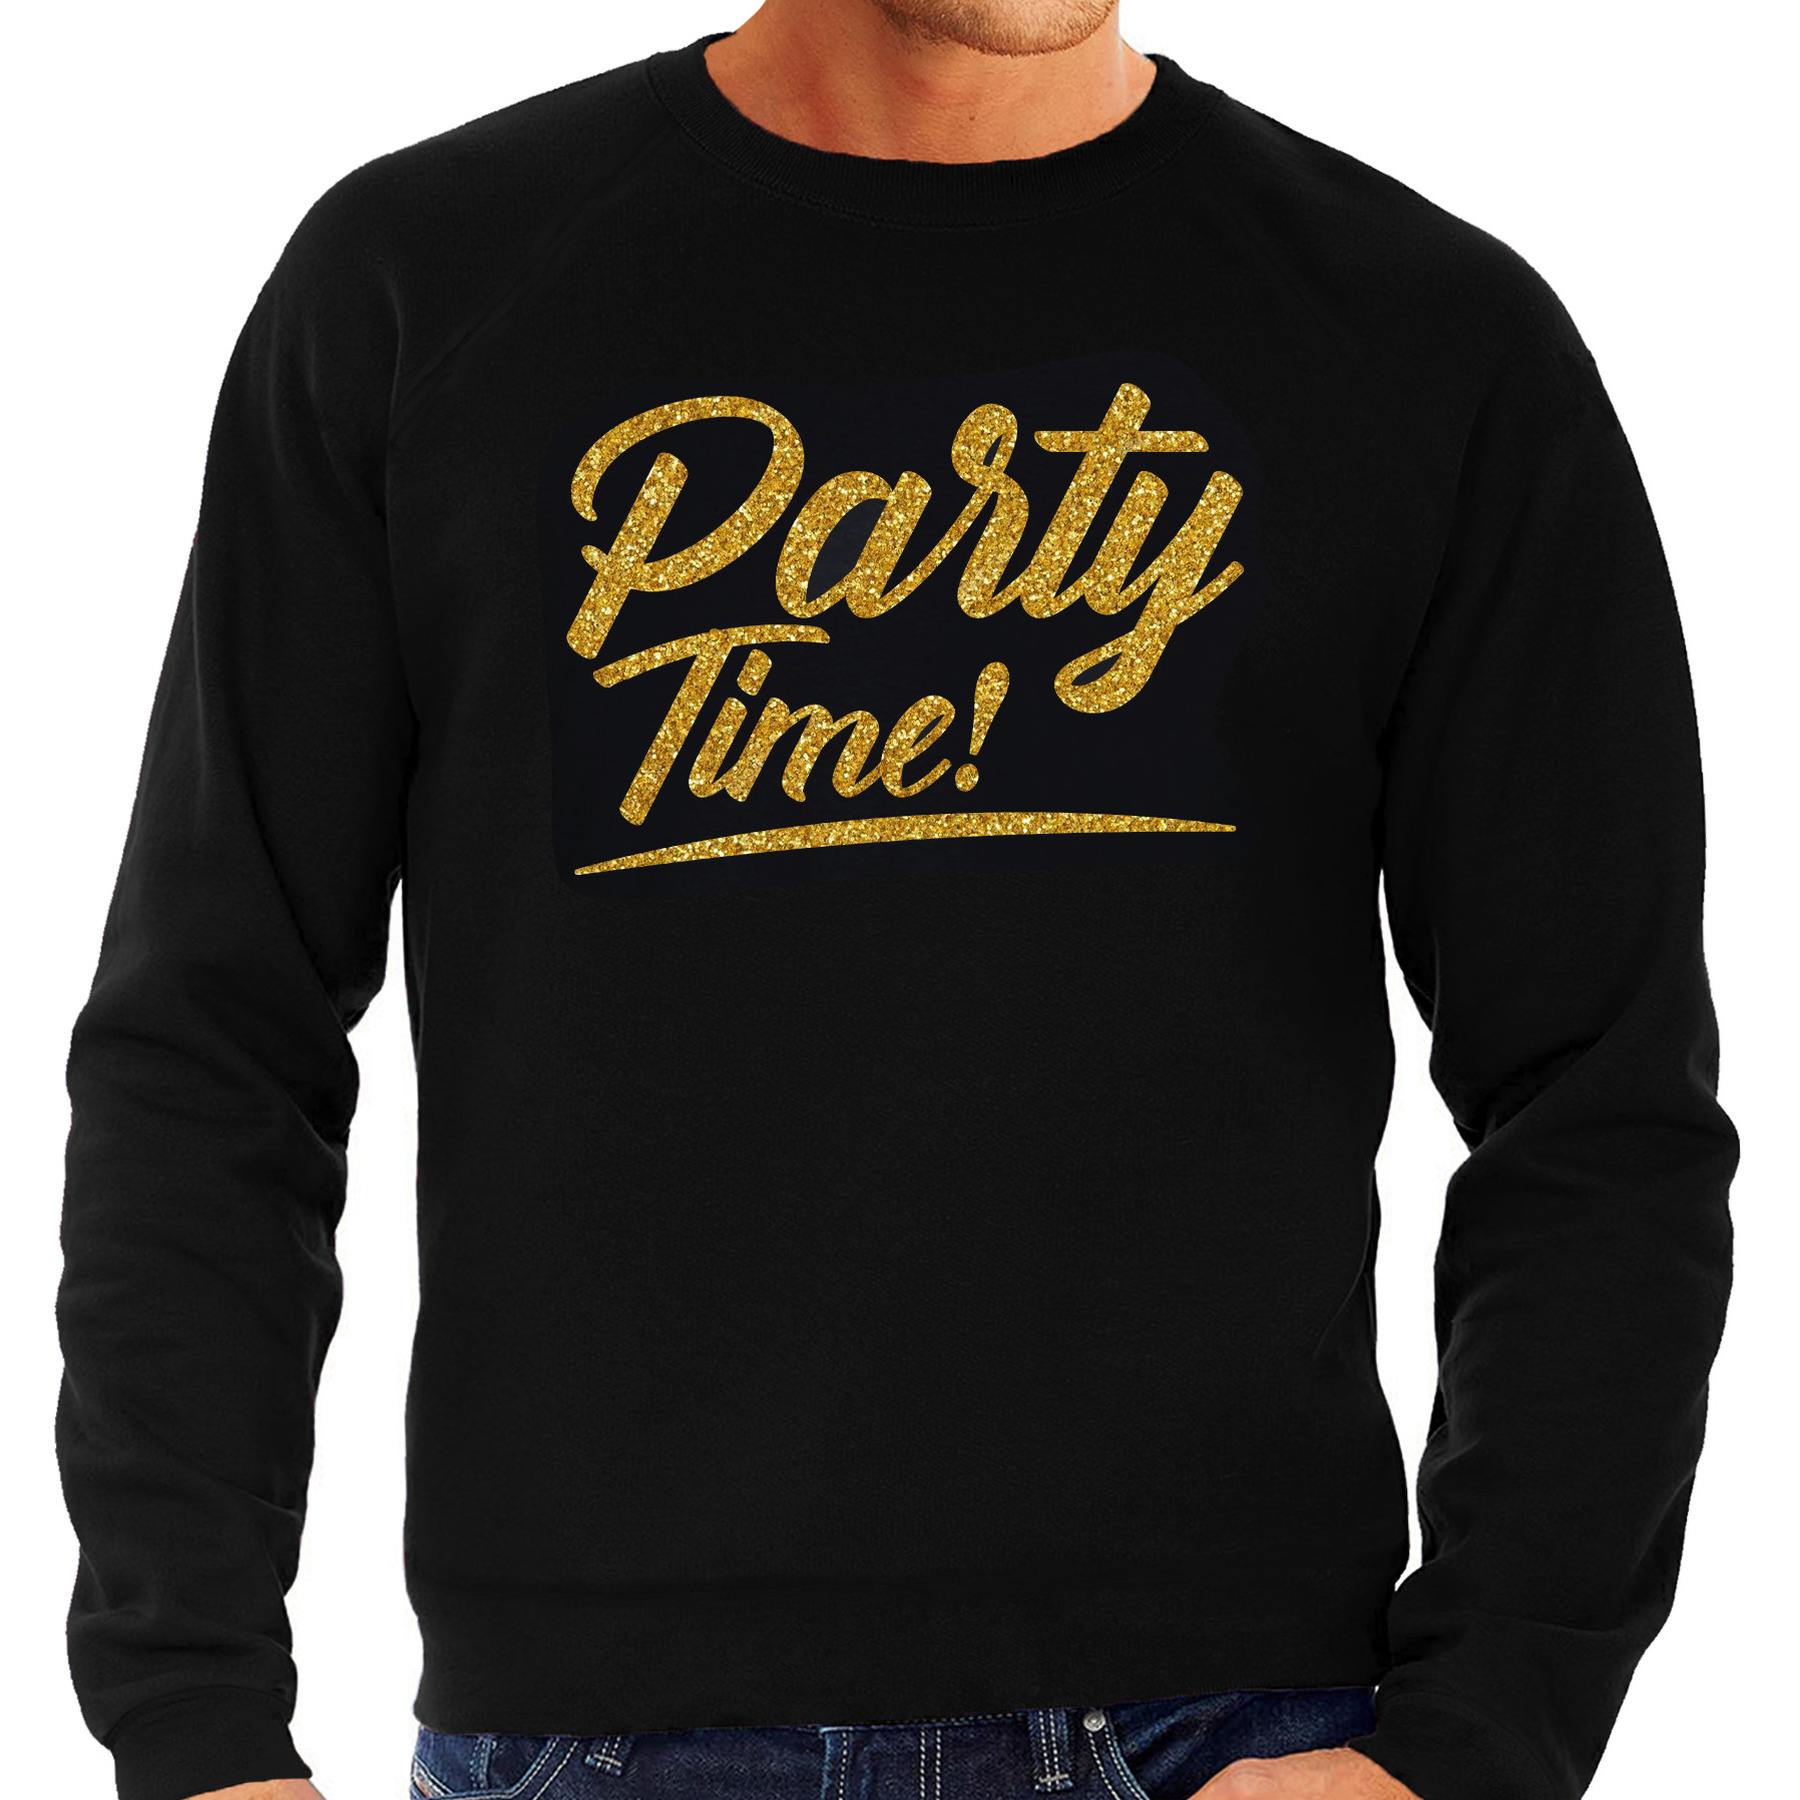 Party time goud tekst sweater zwart heren Glitter en Glamour goud party kleding trui